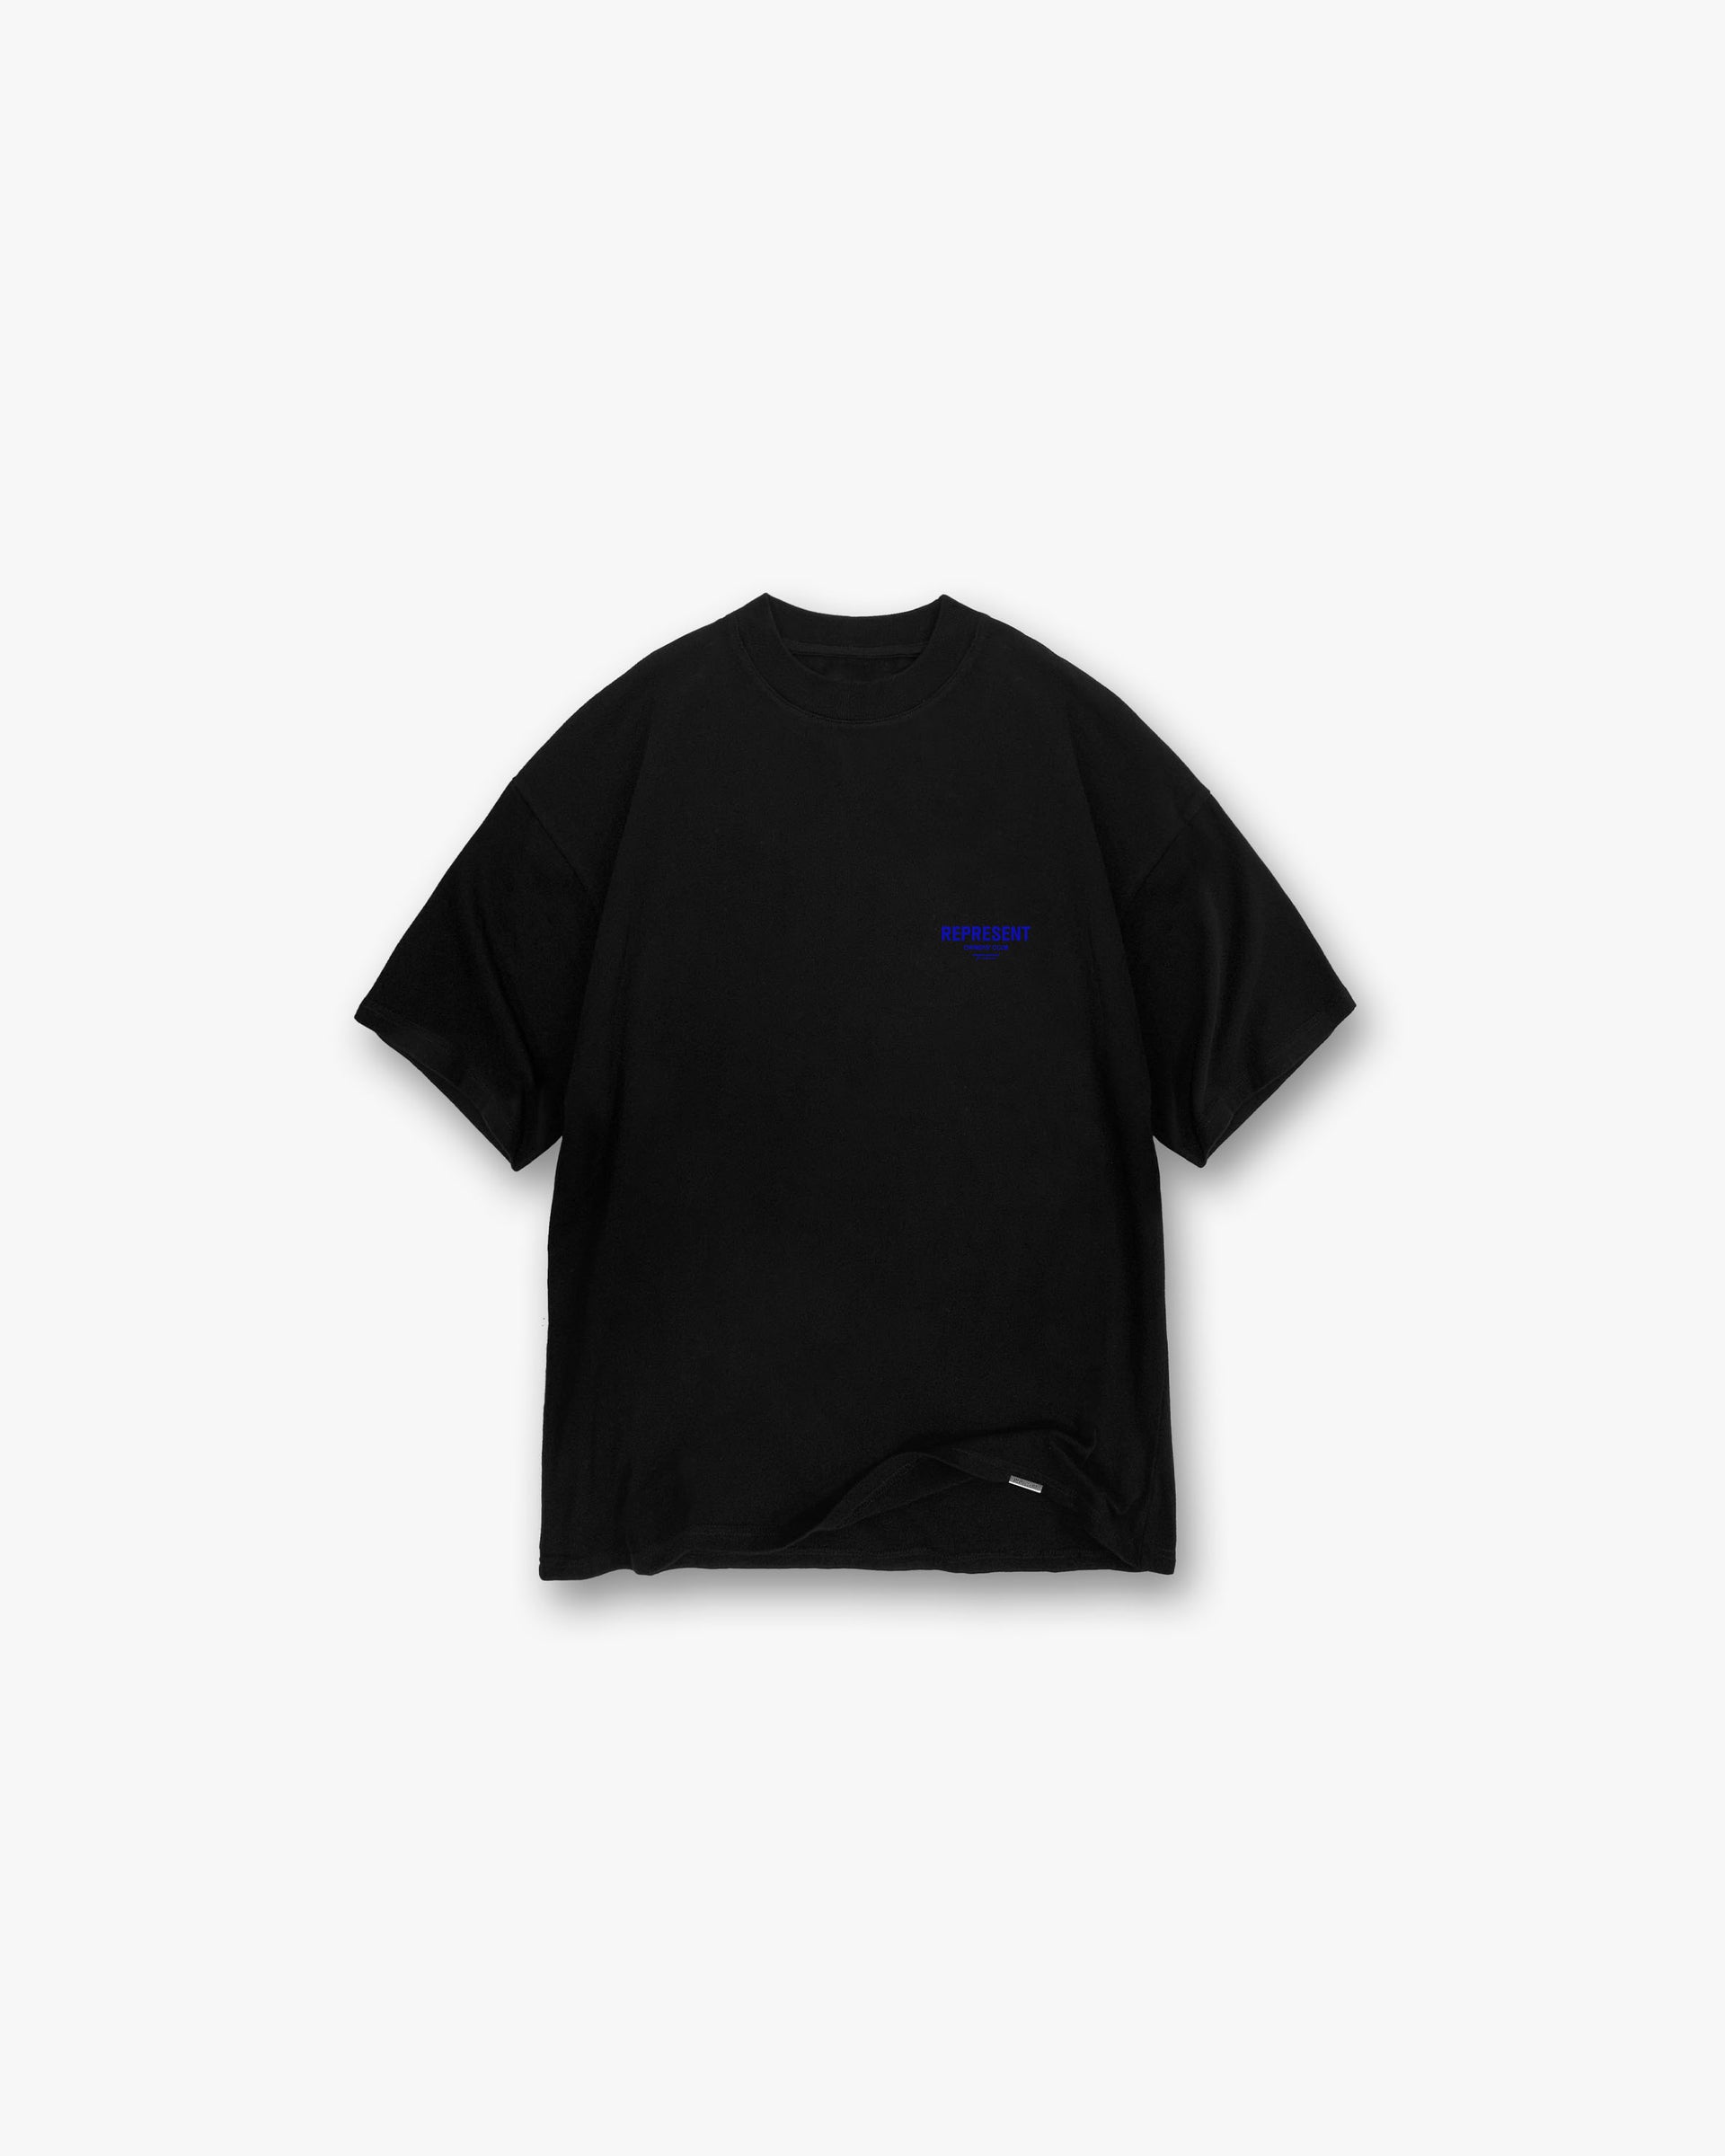 Represent Owners Club T-Shirt | Black Cobalt T-Shirts Owners Club | Represent Clo